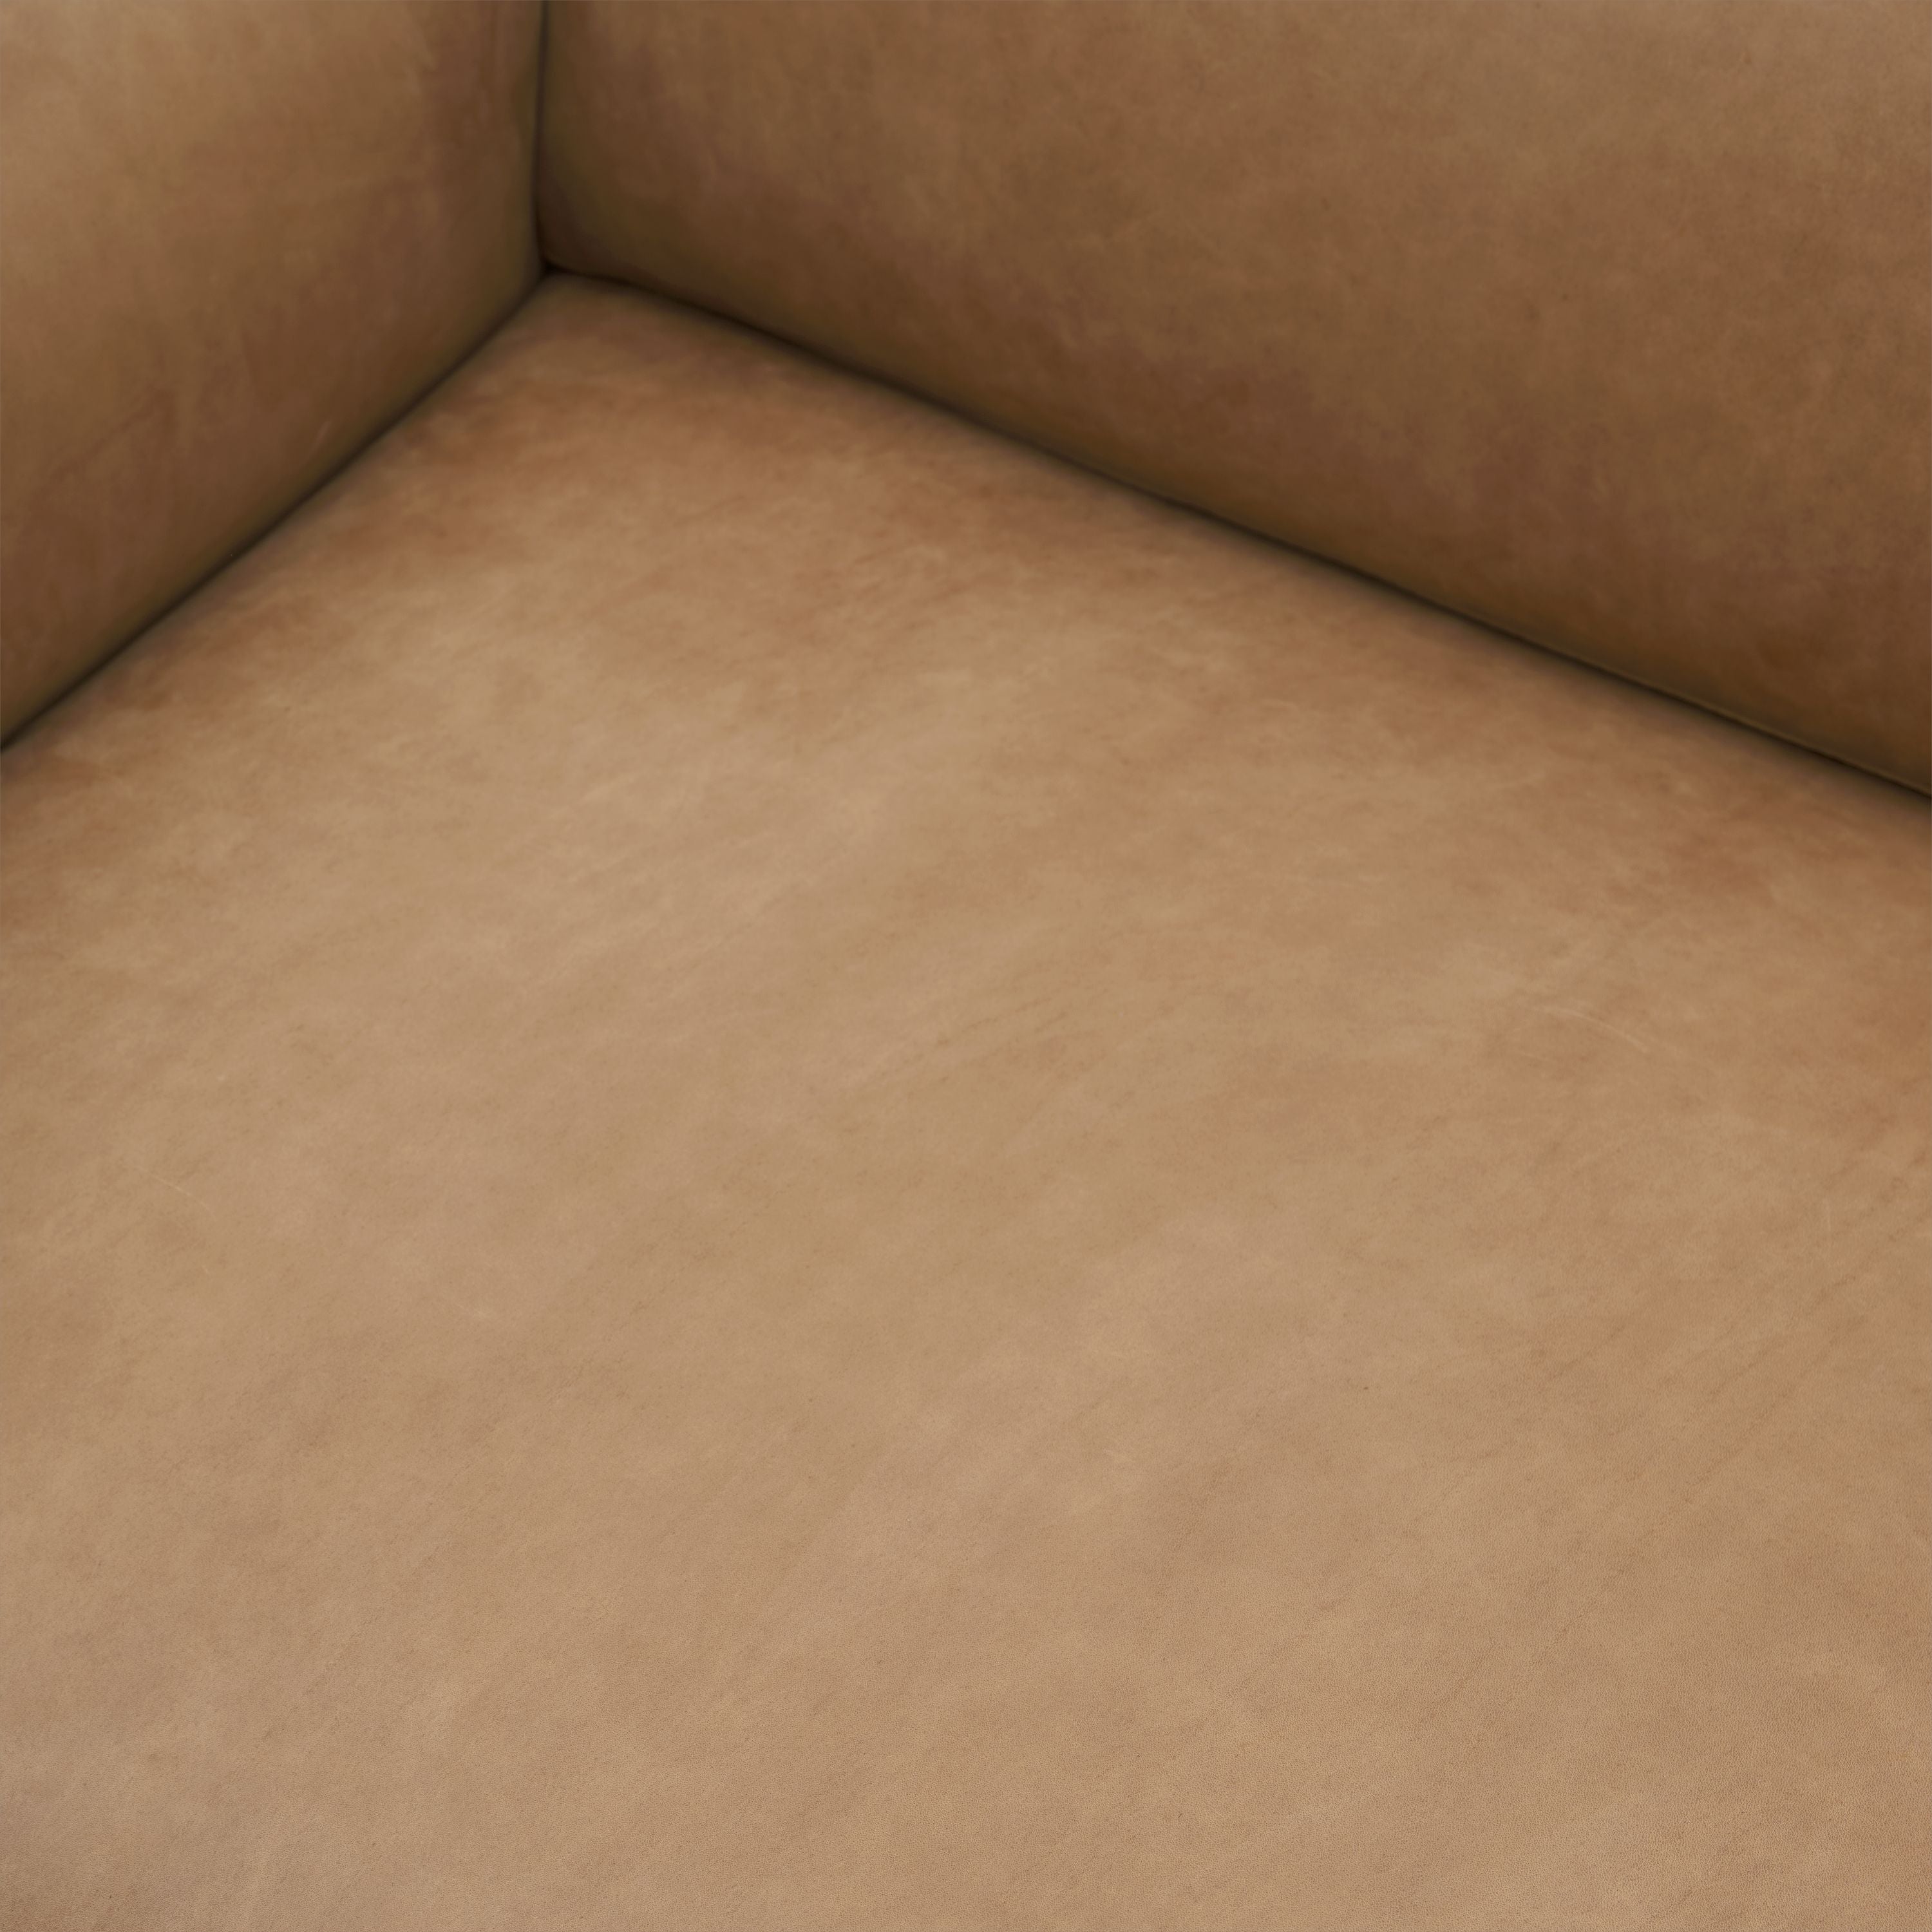 Muuto Outline Sofa 3-seater Grace Leather, Camel/Aluminum